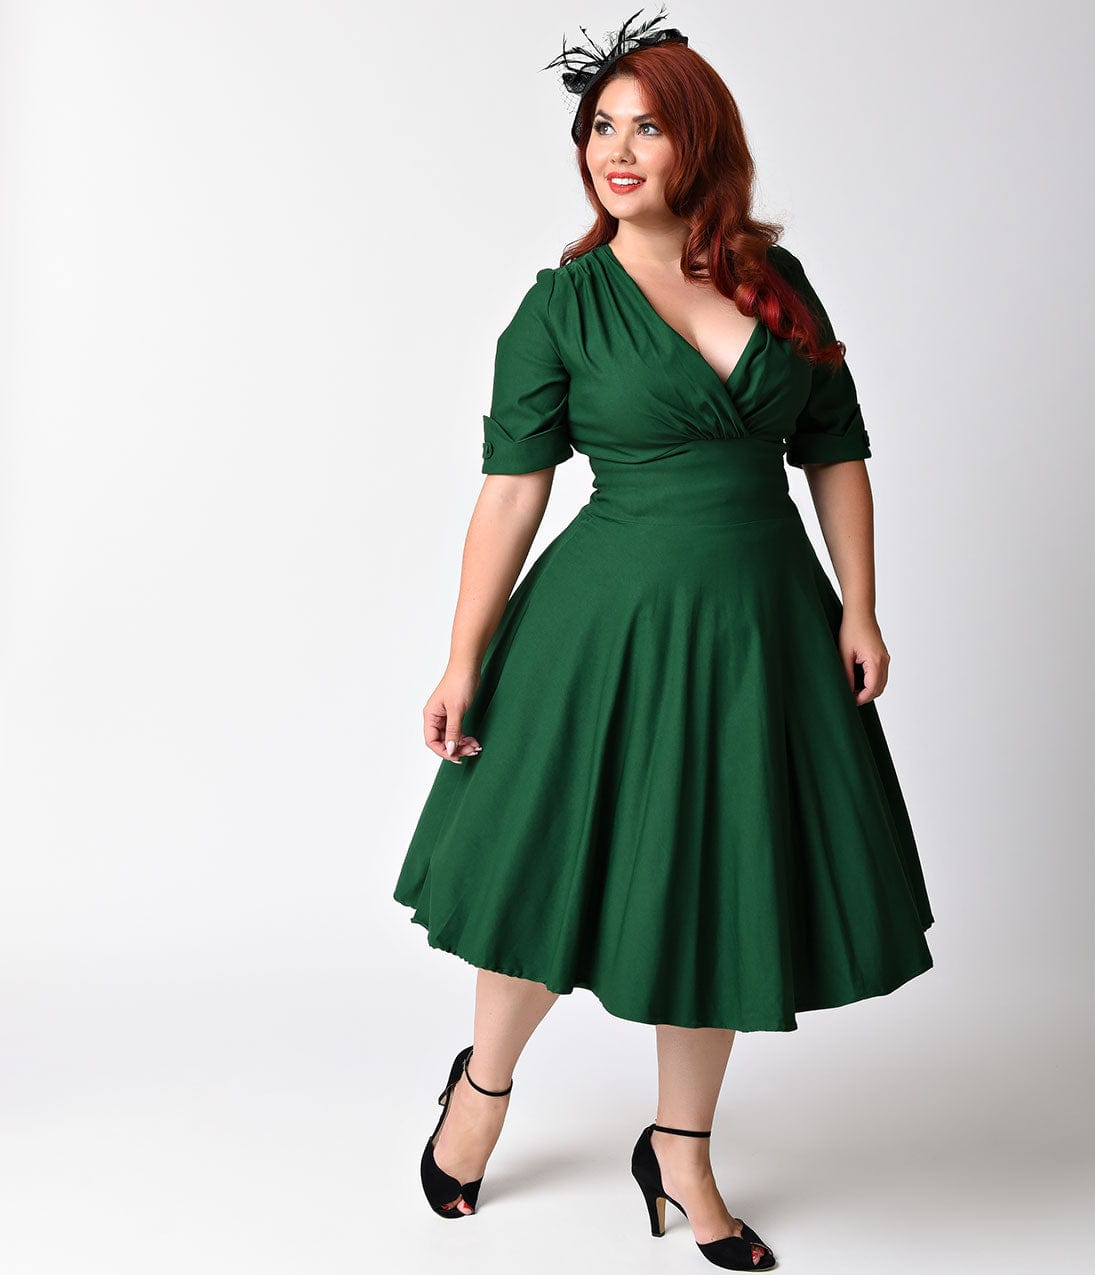 Low Cut Empire Waist Plus Size A Line Dress - Army Green